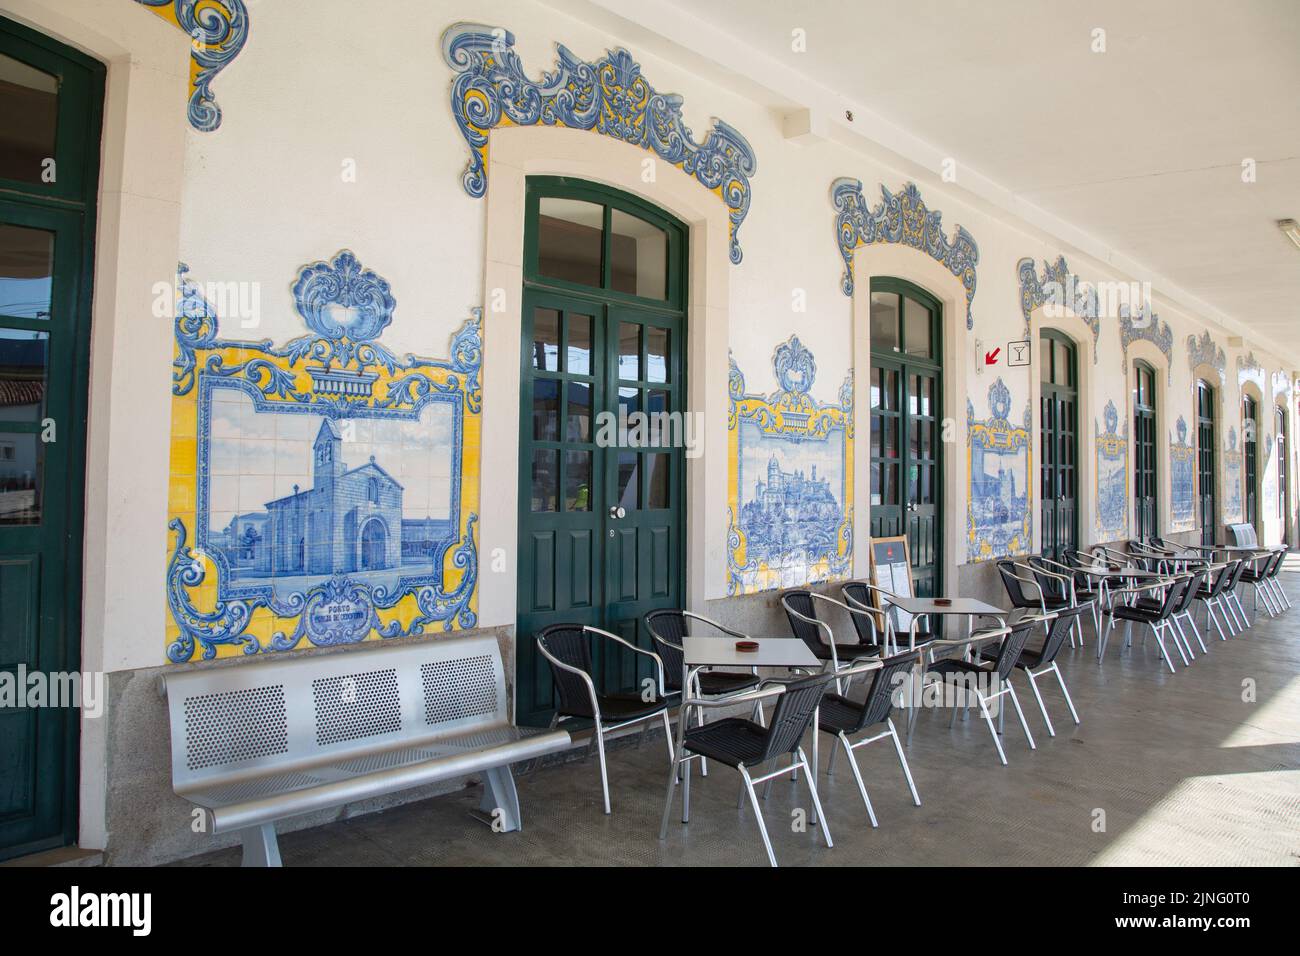 Tile at Vilar Formoso Railway Station; Portugal Stock Photo